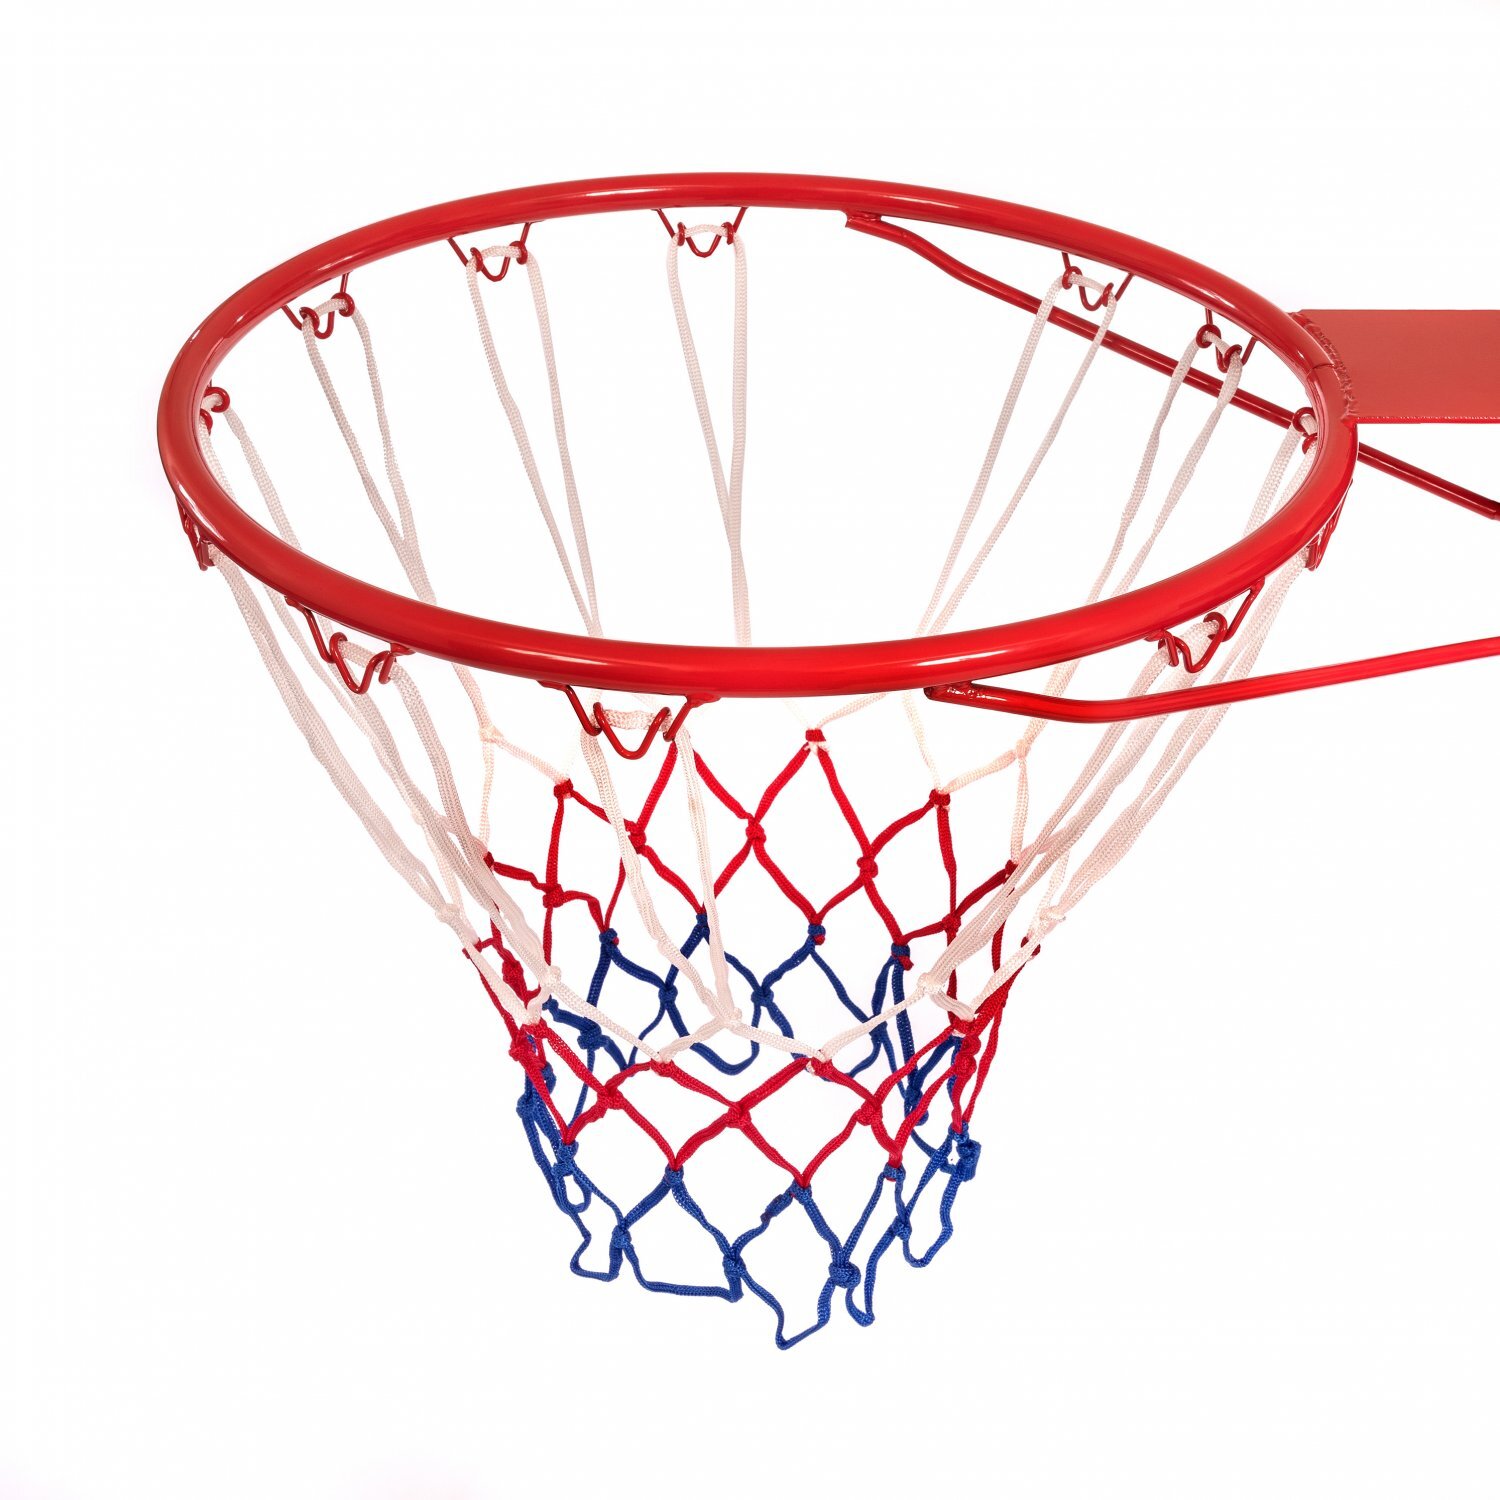 ND 45cm Standard Wall Mounted Basketball Hoop Net Outdoor Goal Sports Play Ring 